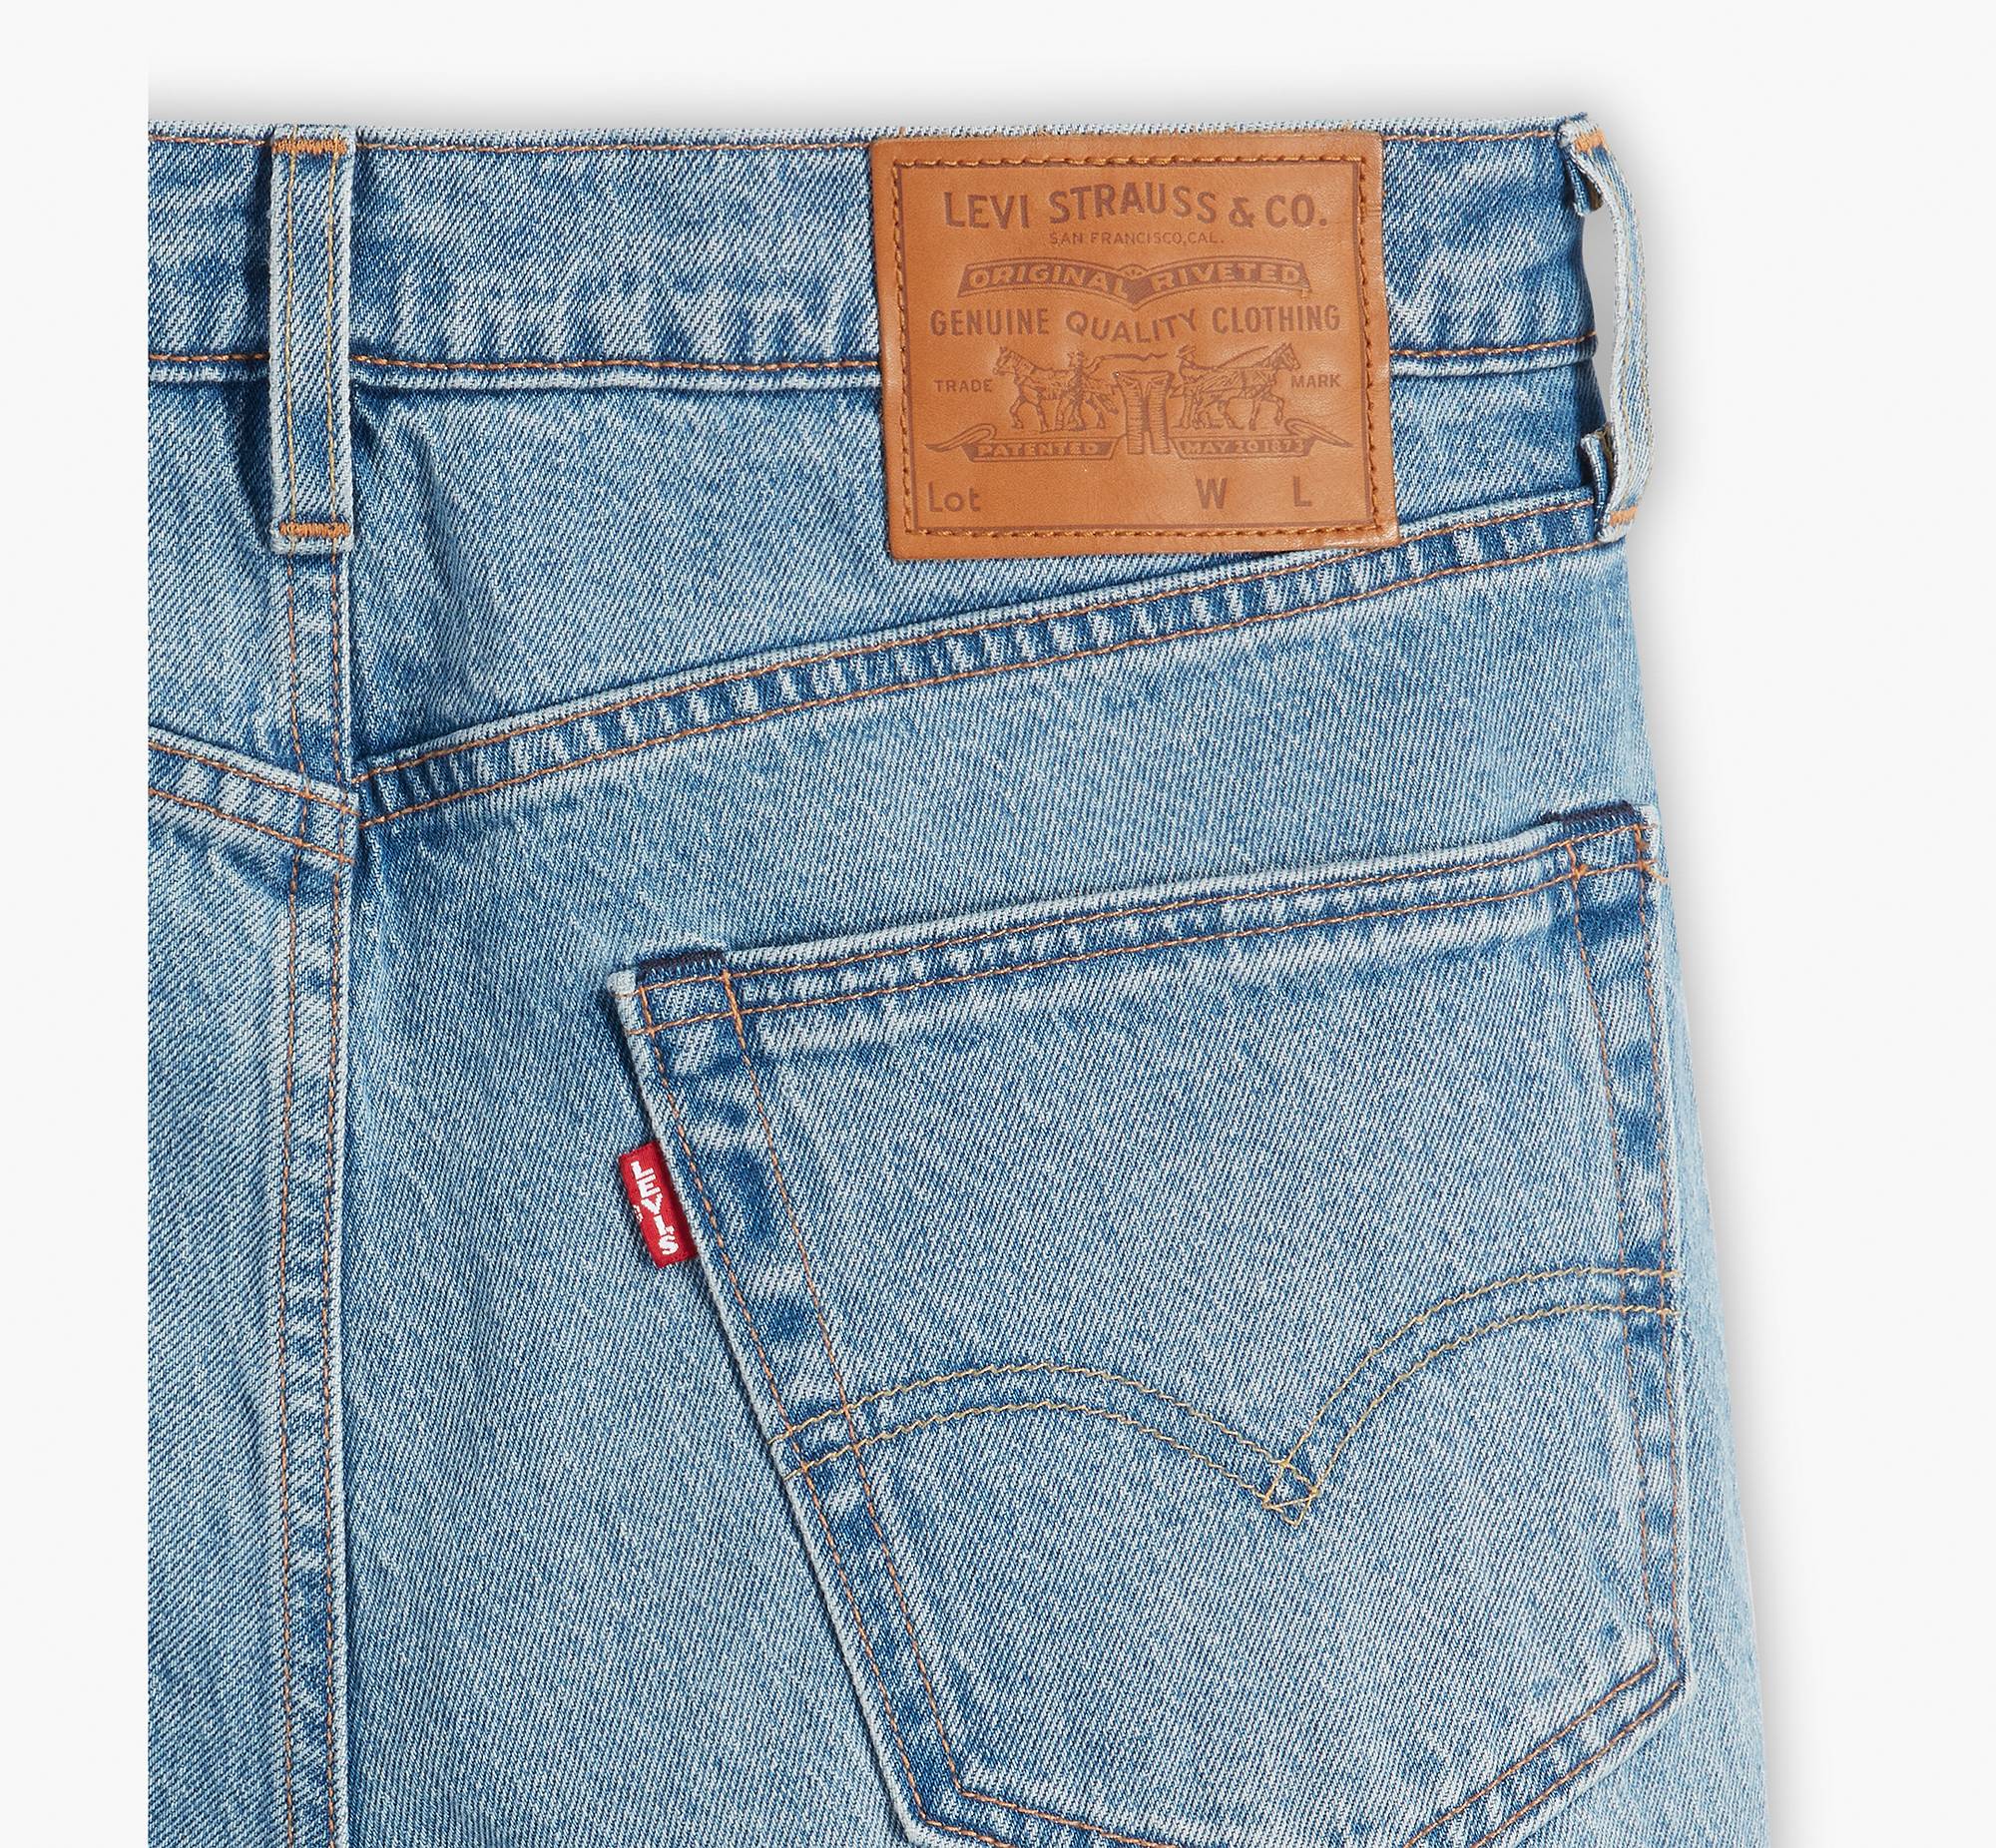 527™ Slim Bootcut Jeans 8